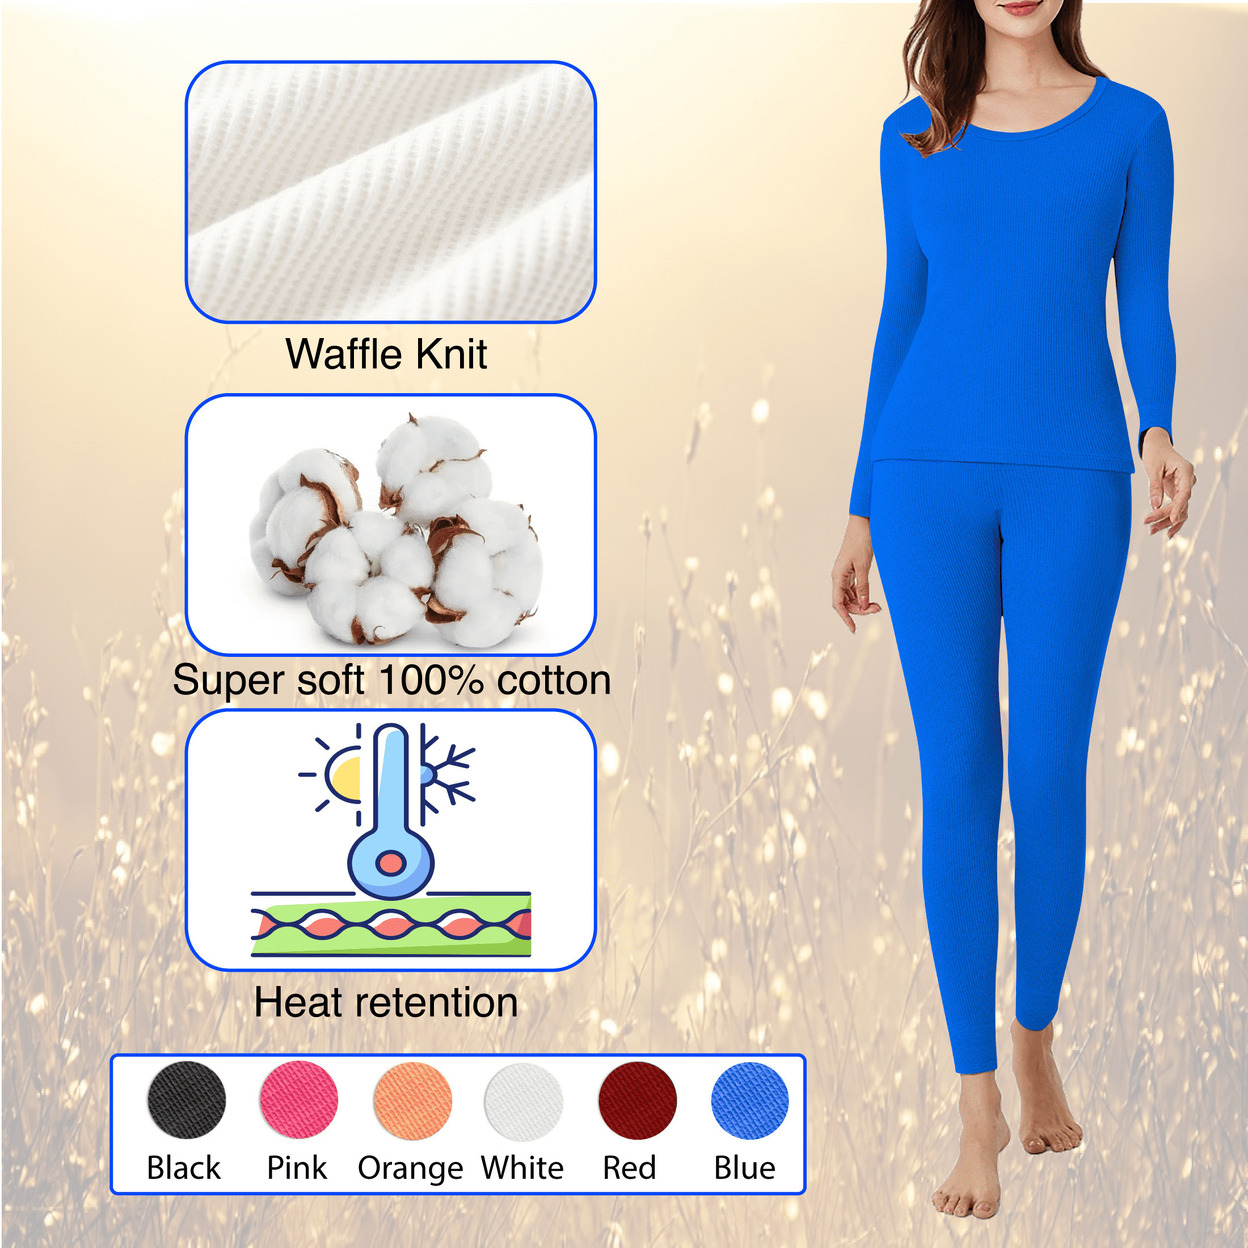 2-Piece: Women's Ultra Soft Cotton Waffle Knit Thermal Sets - White, Xx-large